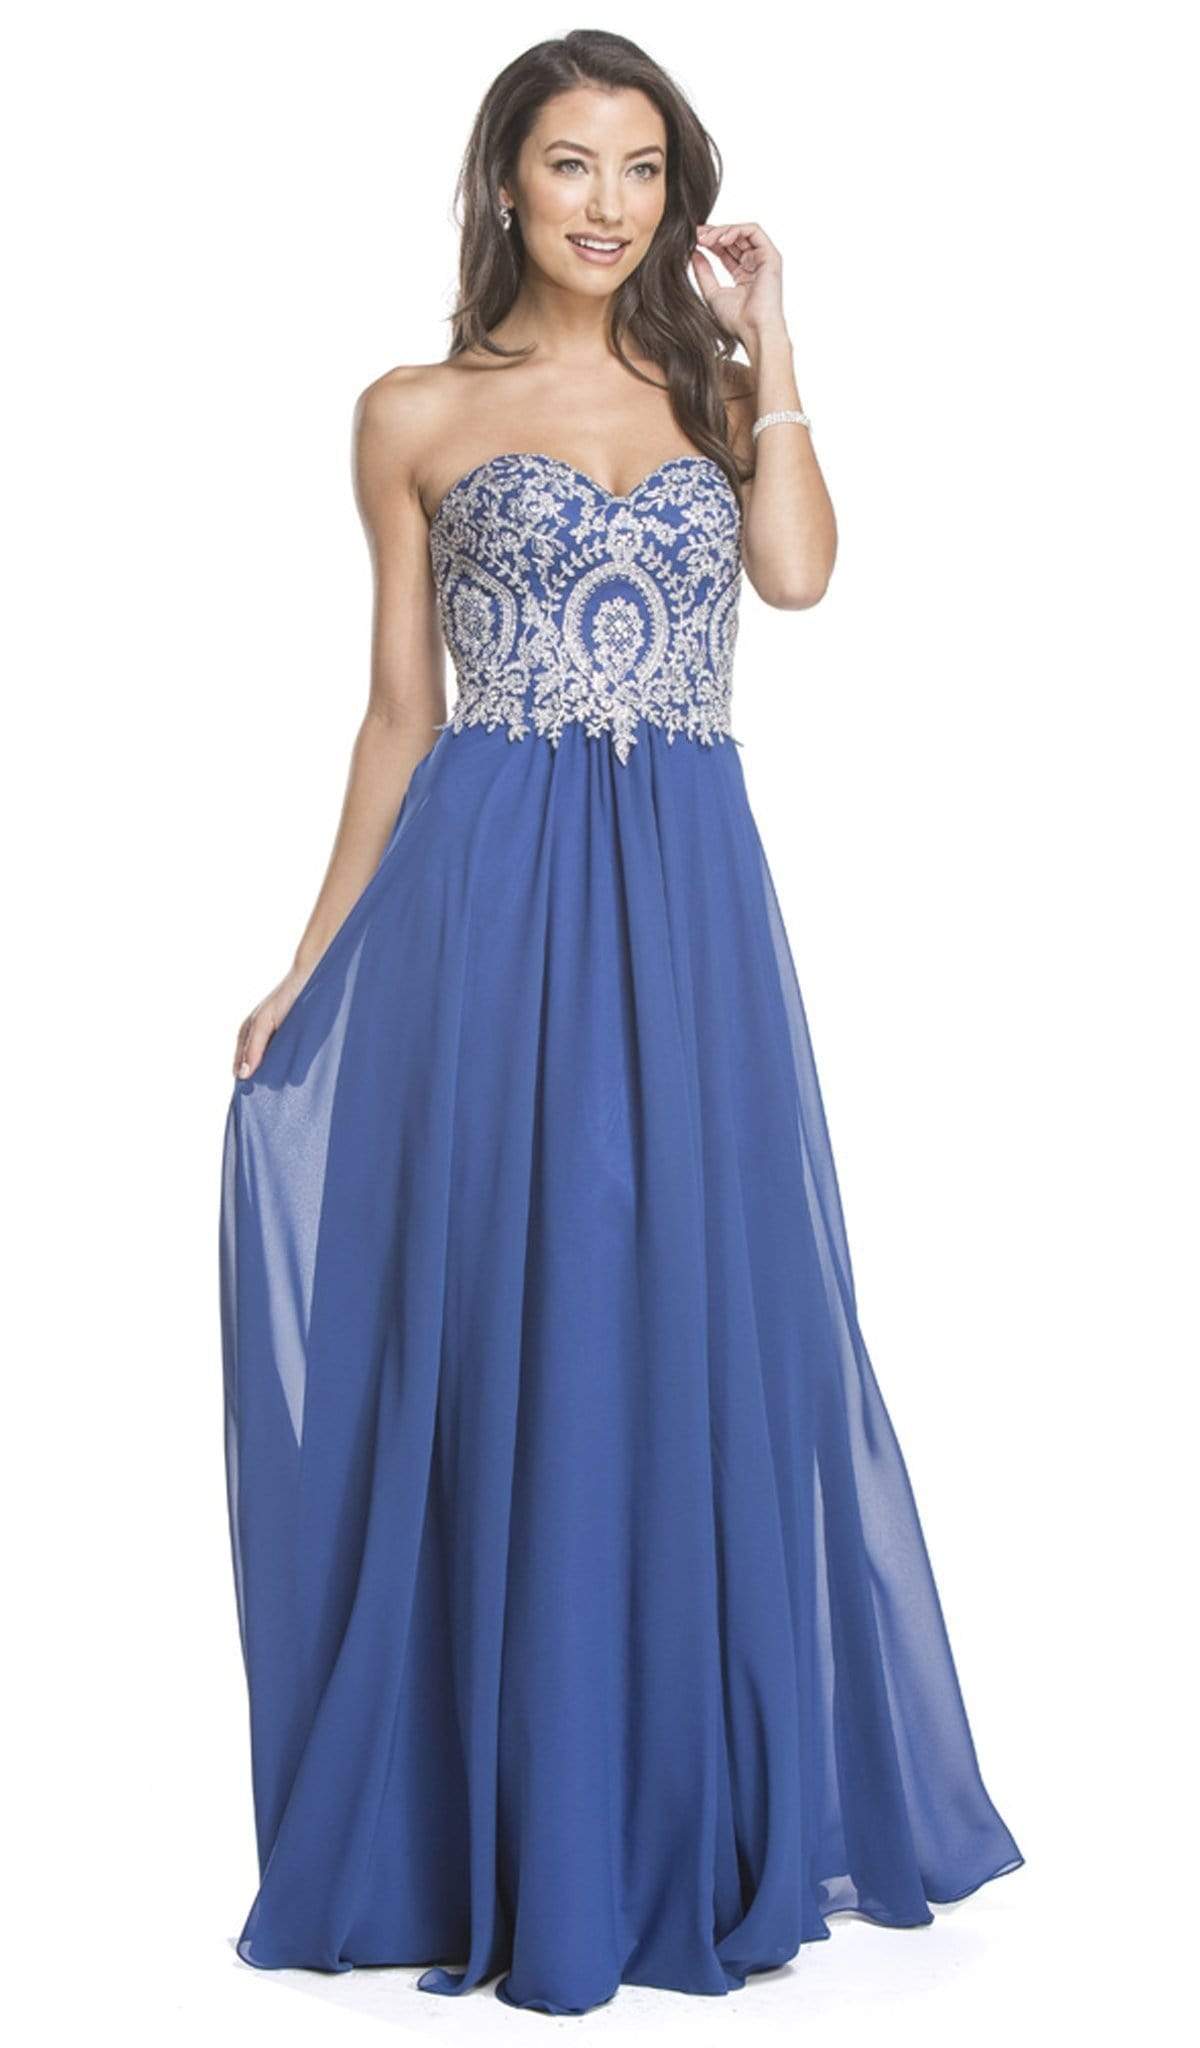 Image of Aspeed Design - Ornate Strapless Sweetheart Prom Dress